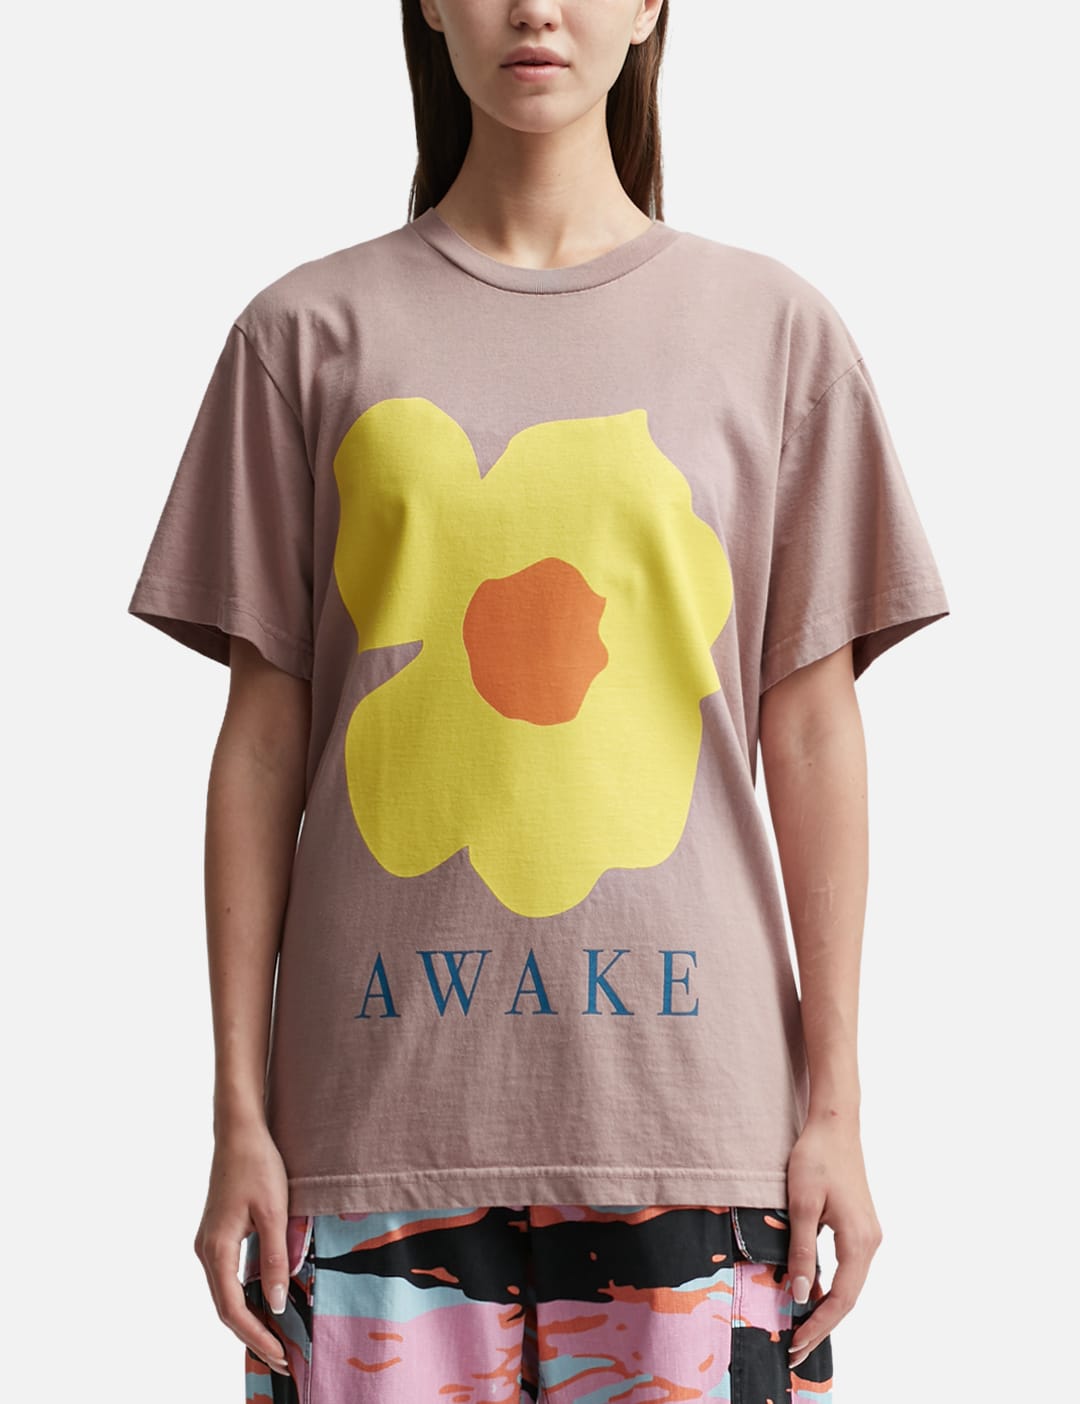 Awake NY - フローラル Tシャツ | HBX - ハイプビースト(Hypebeast ...